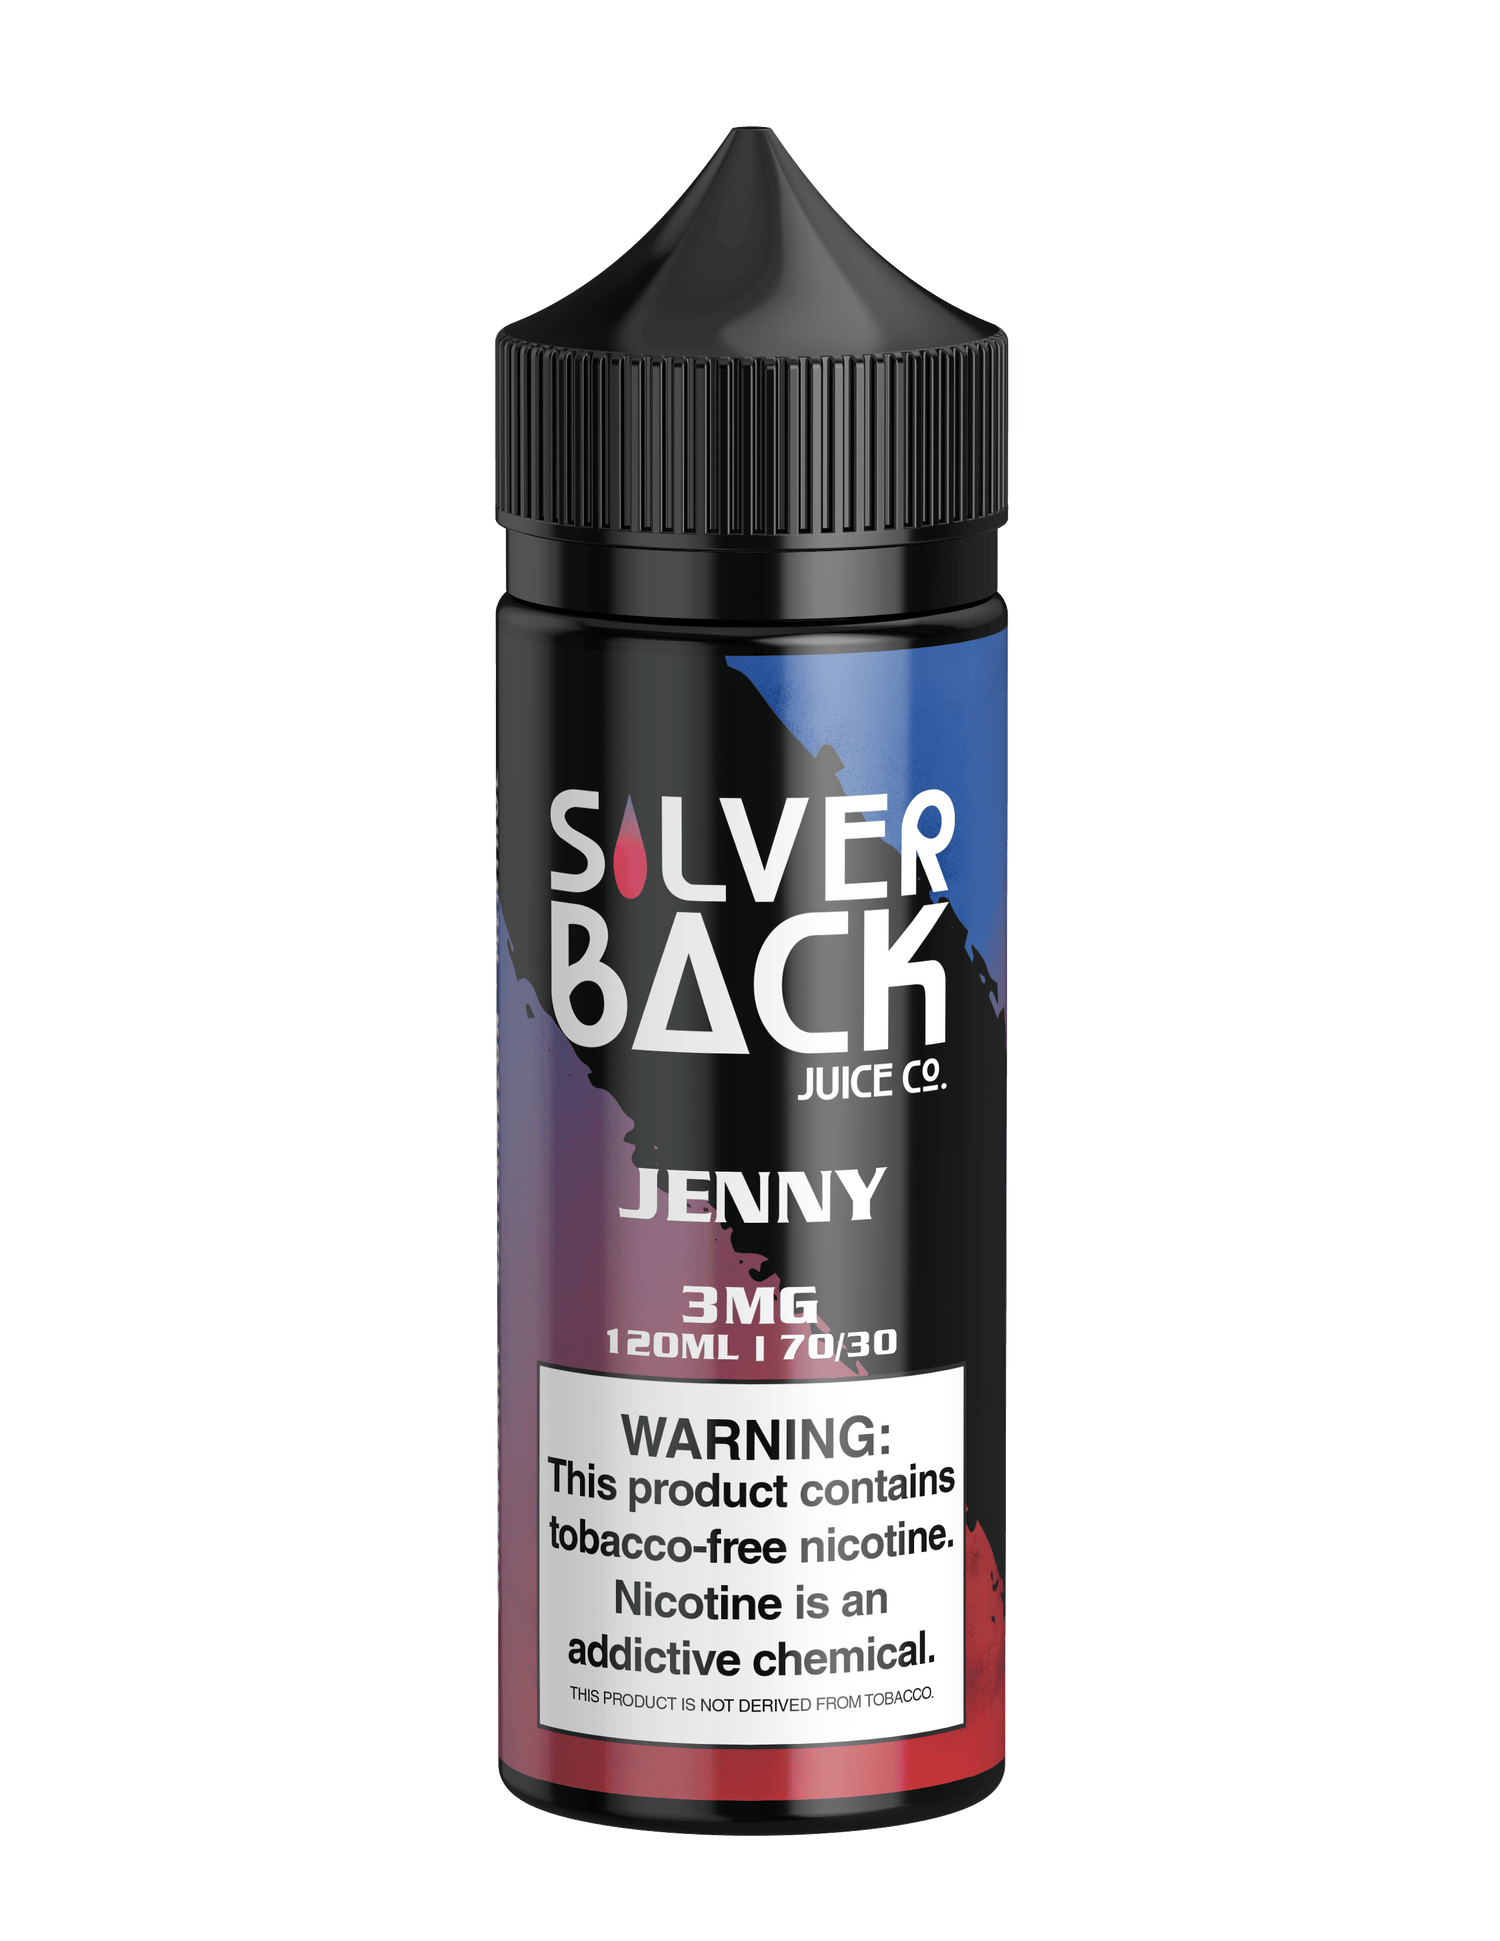 Jenny - Silverback Juice Co. - 120mL